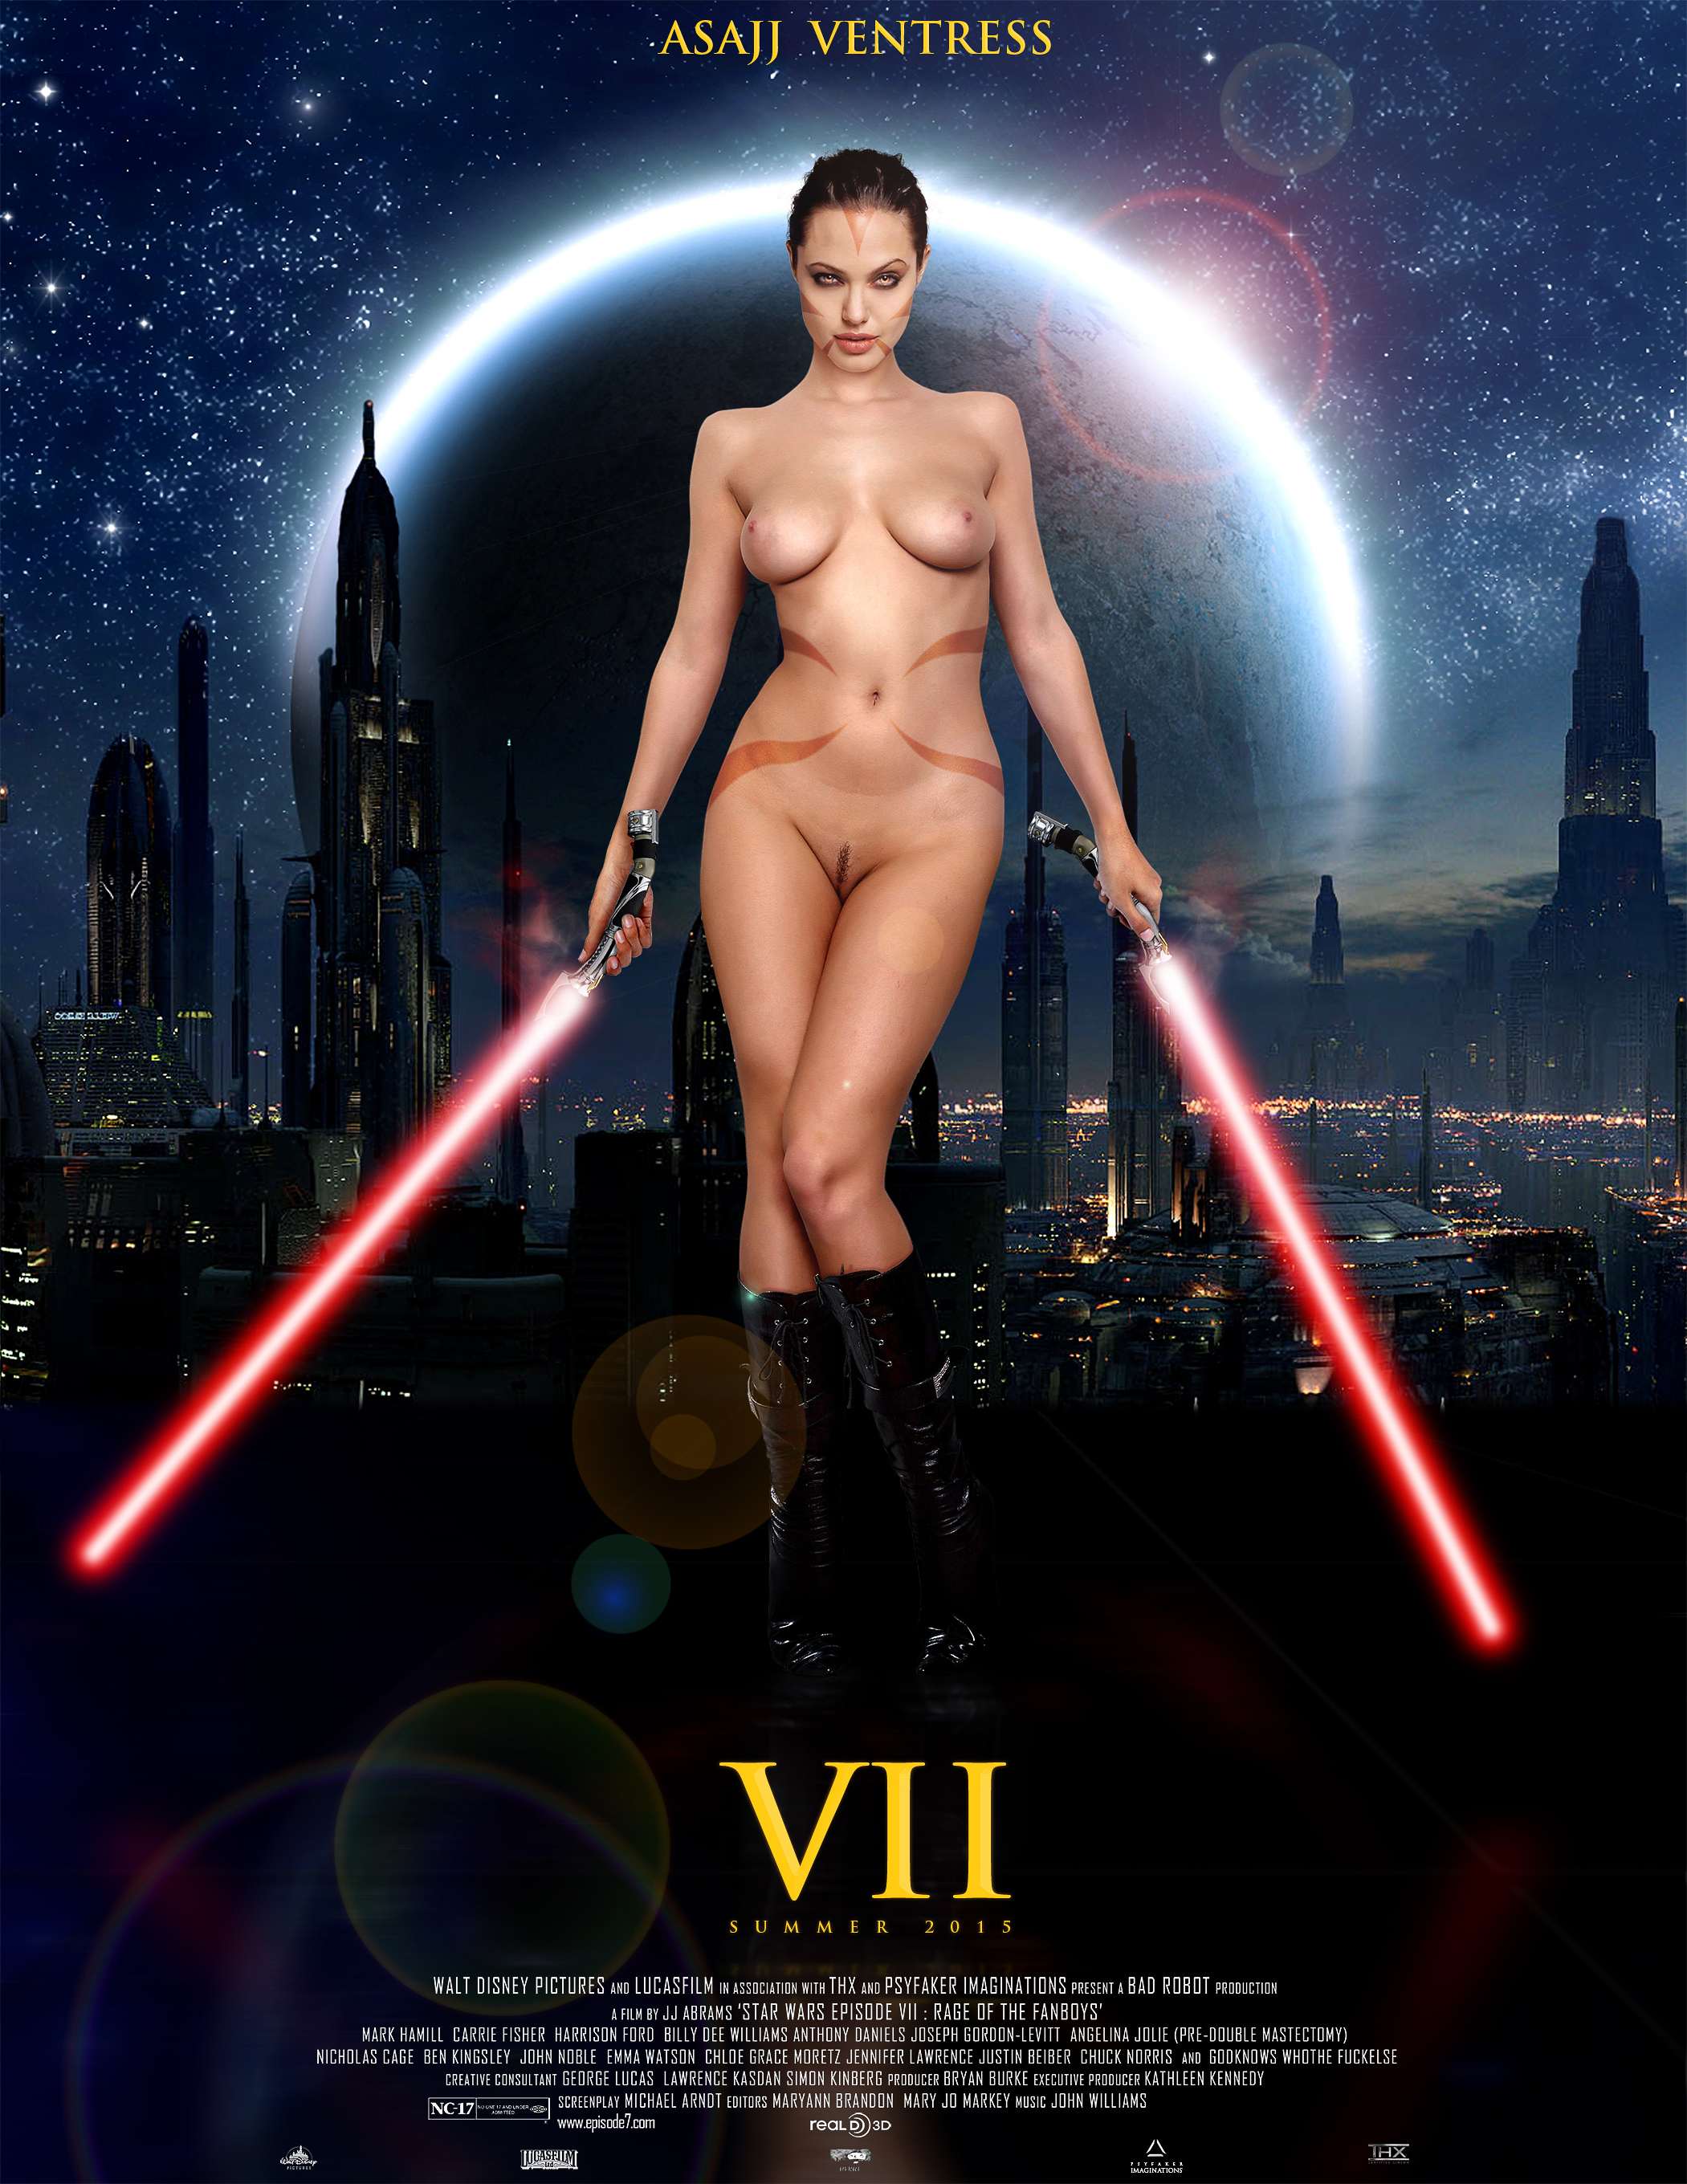 Star Wars Sex Fake - Star wars fake nudes hentay image